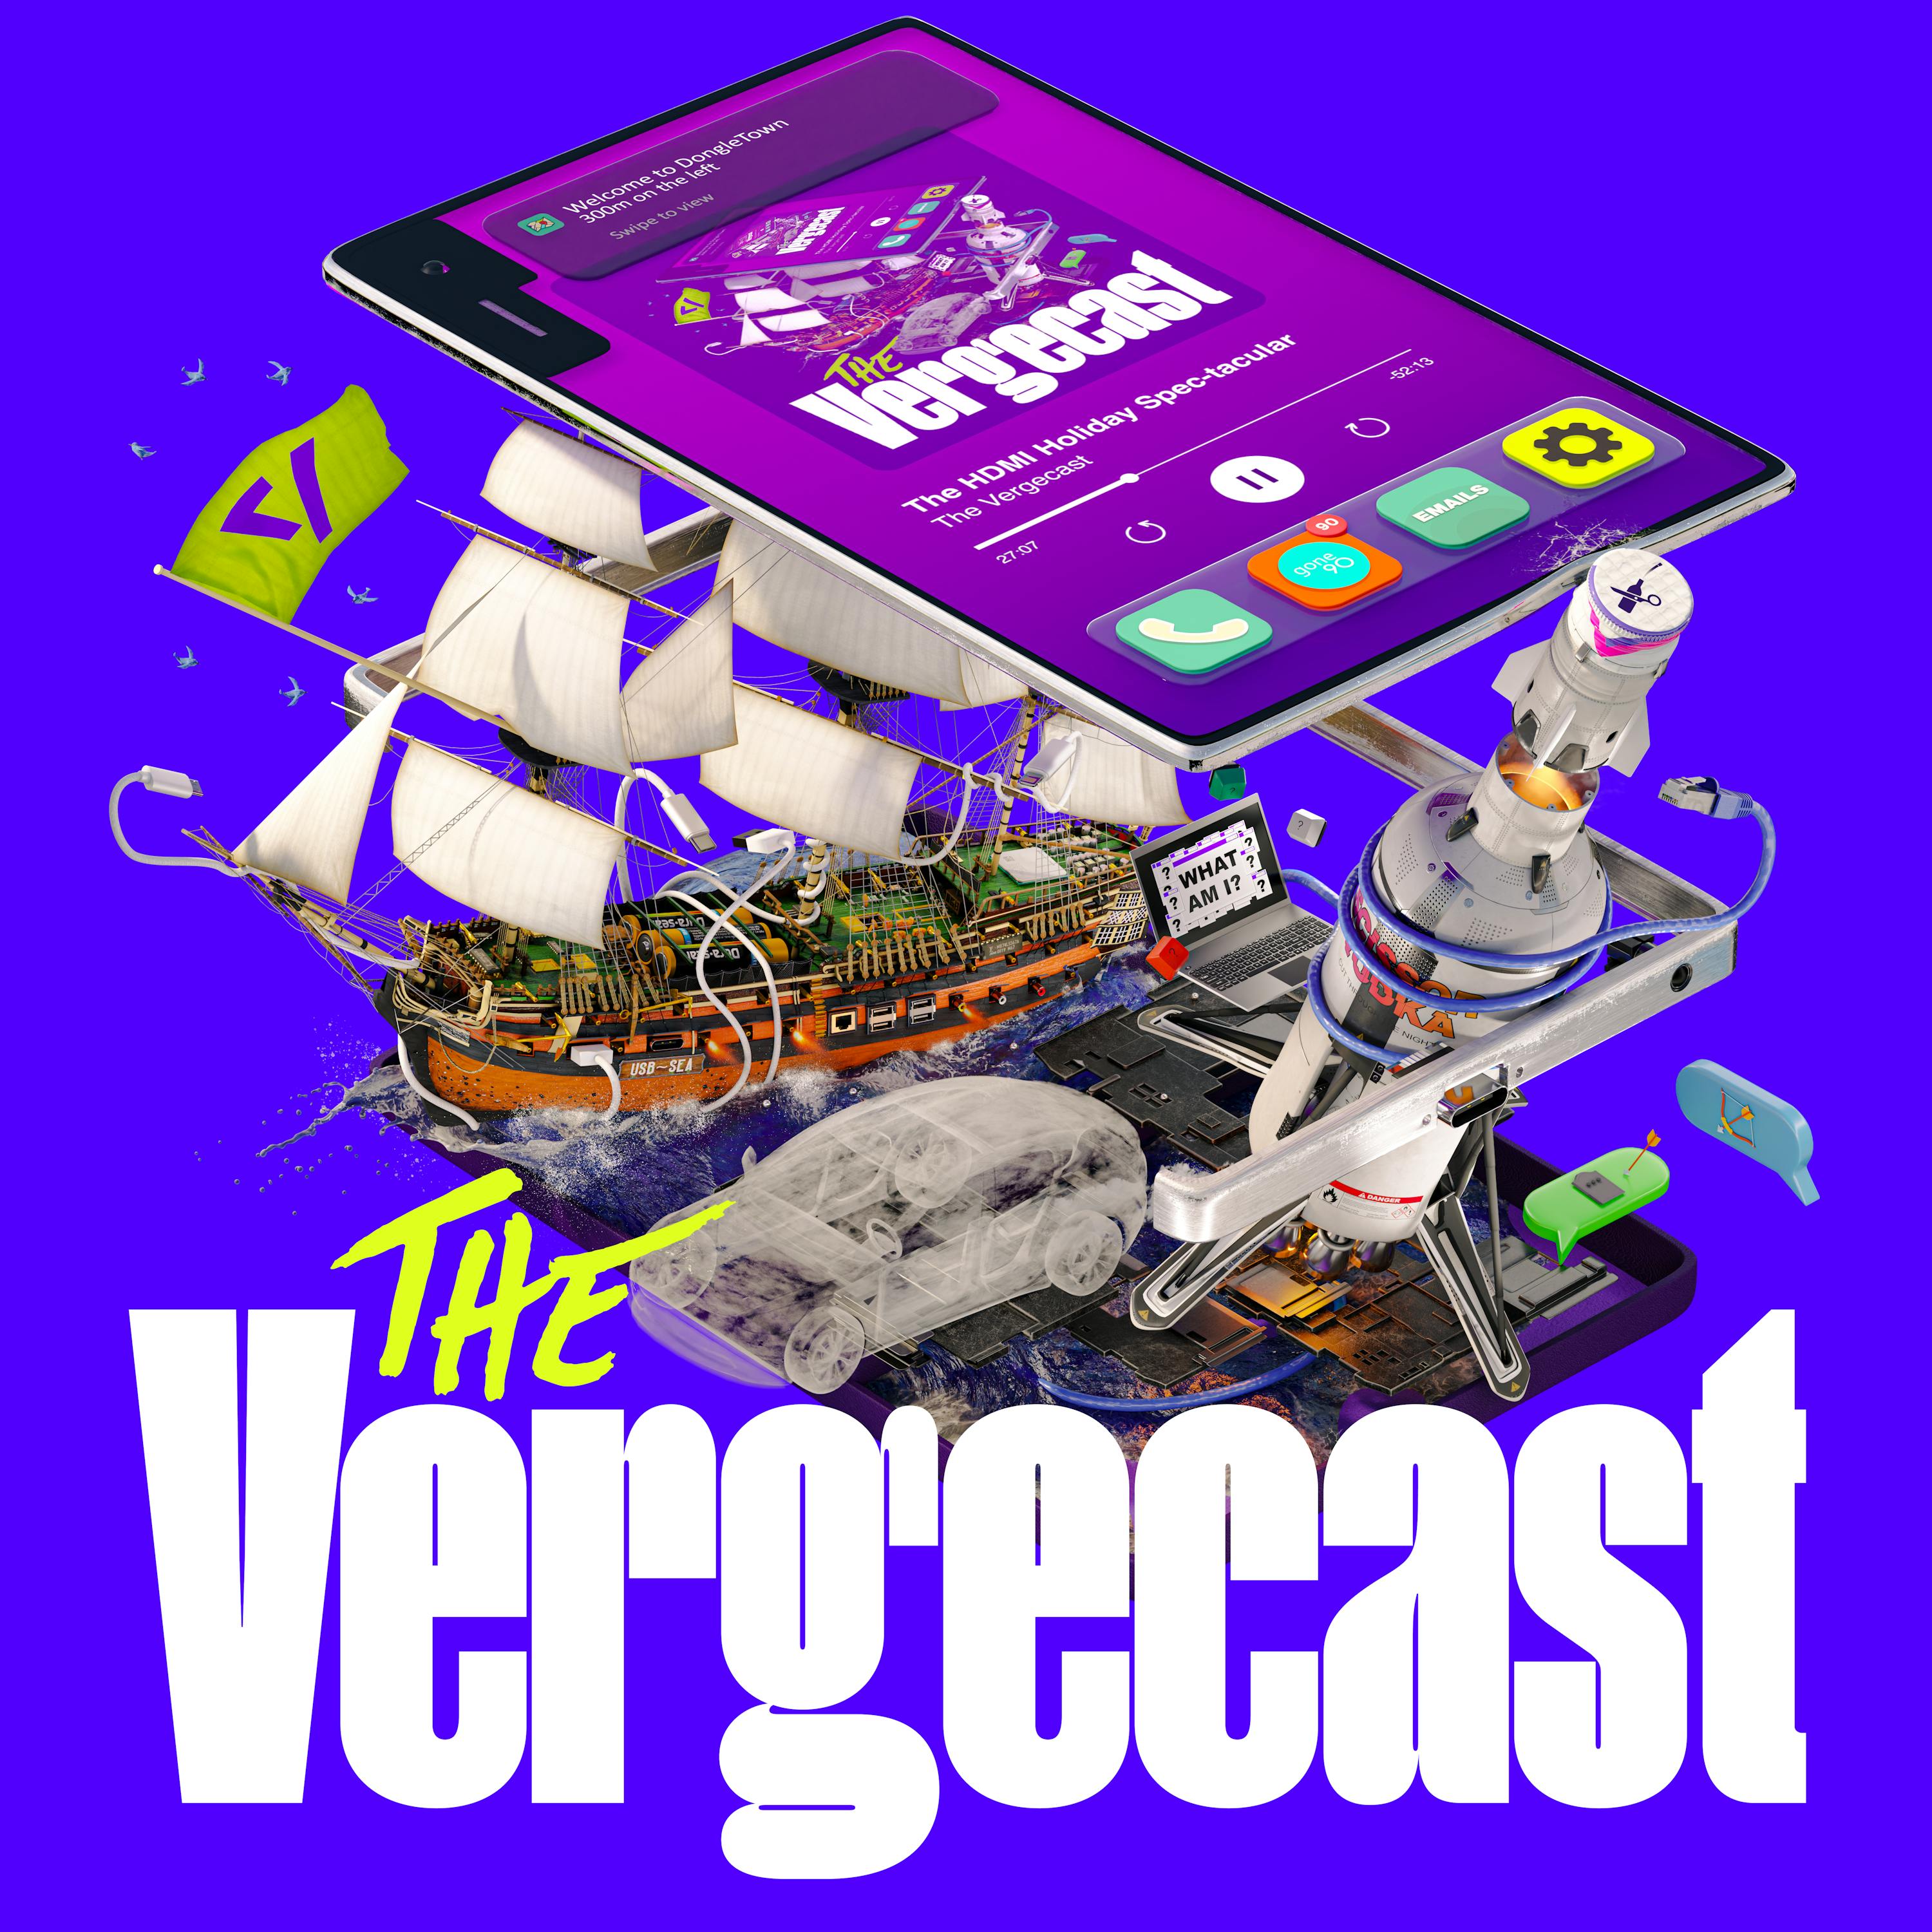 The Vergecast podcast